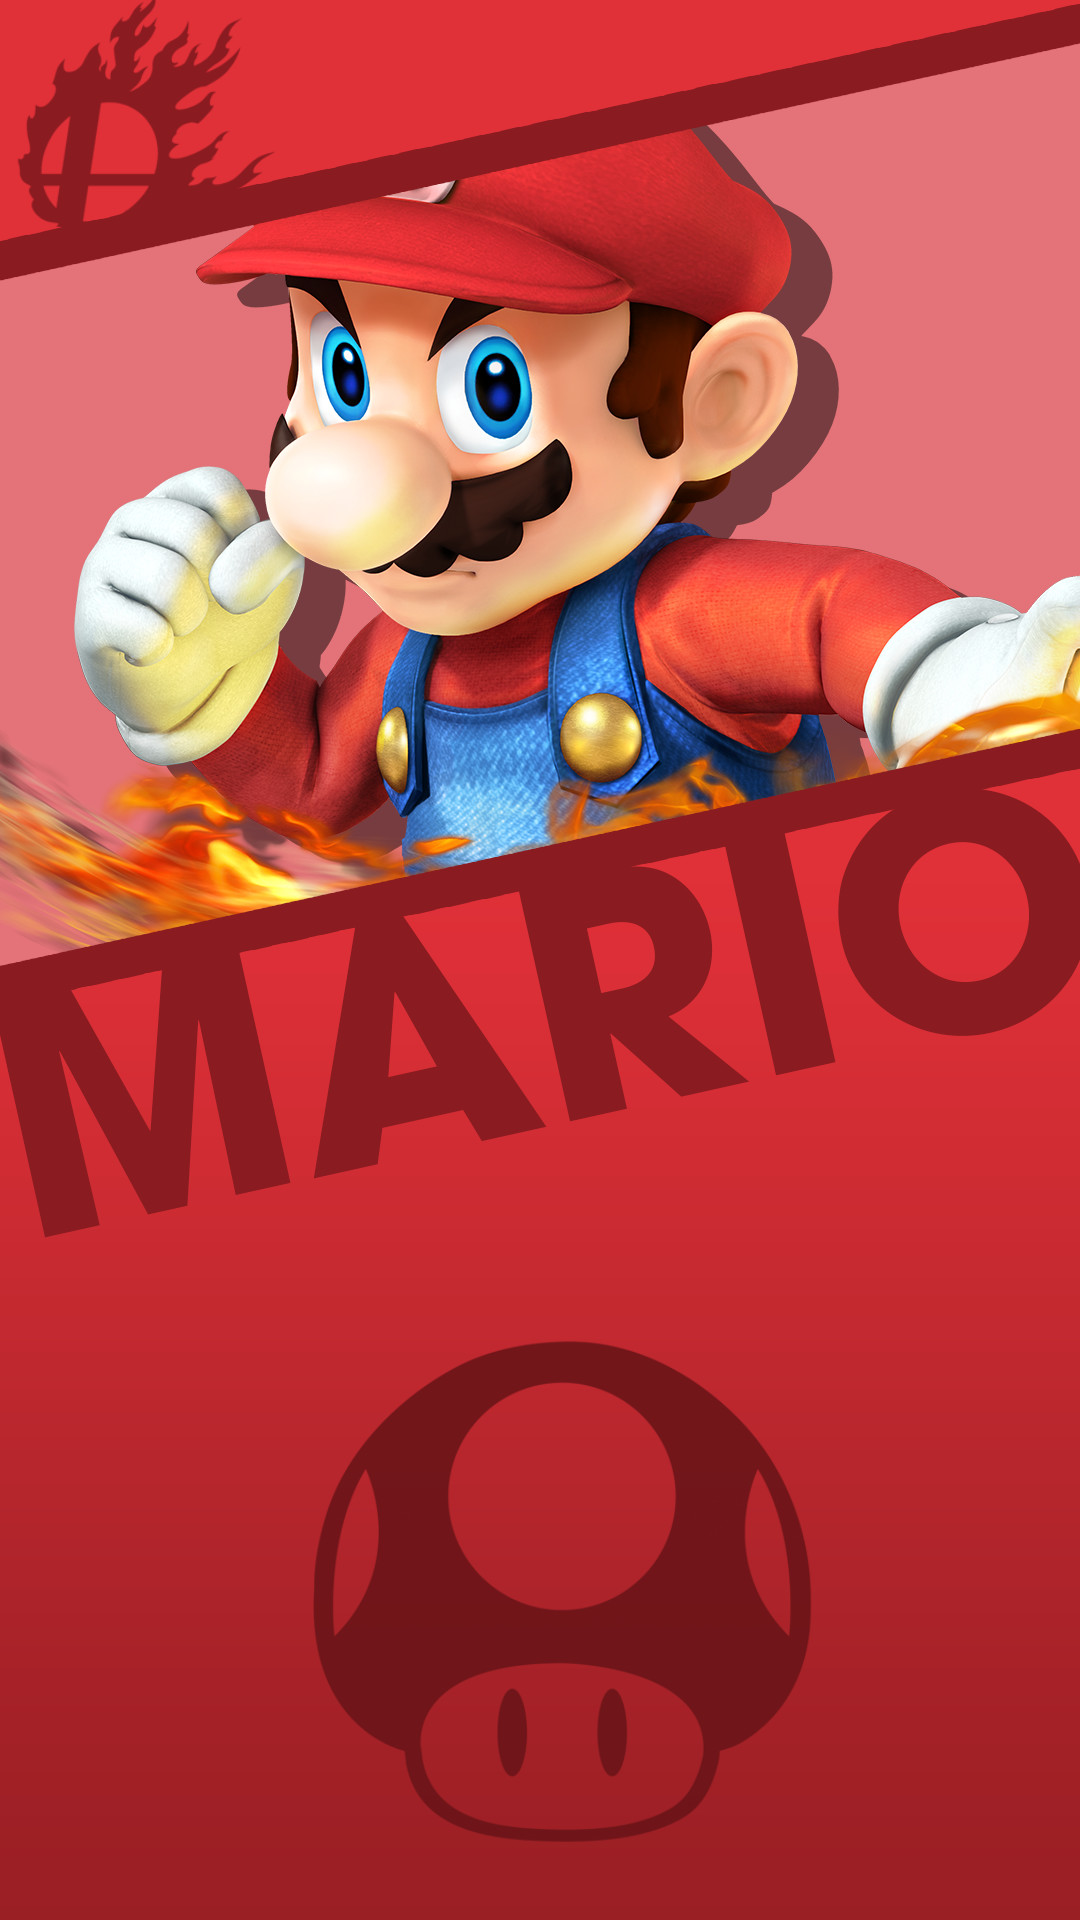 1080x1920 Mario Smash Bros. Phone Wallpaper by MrThatKidAlex24 on .